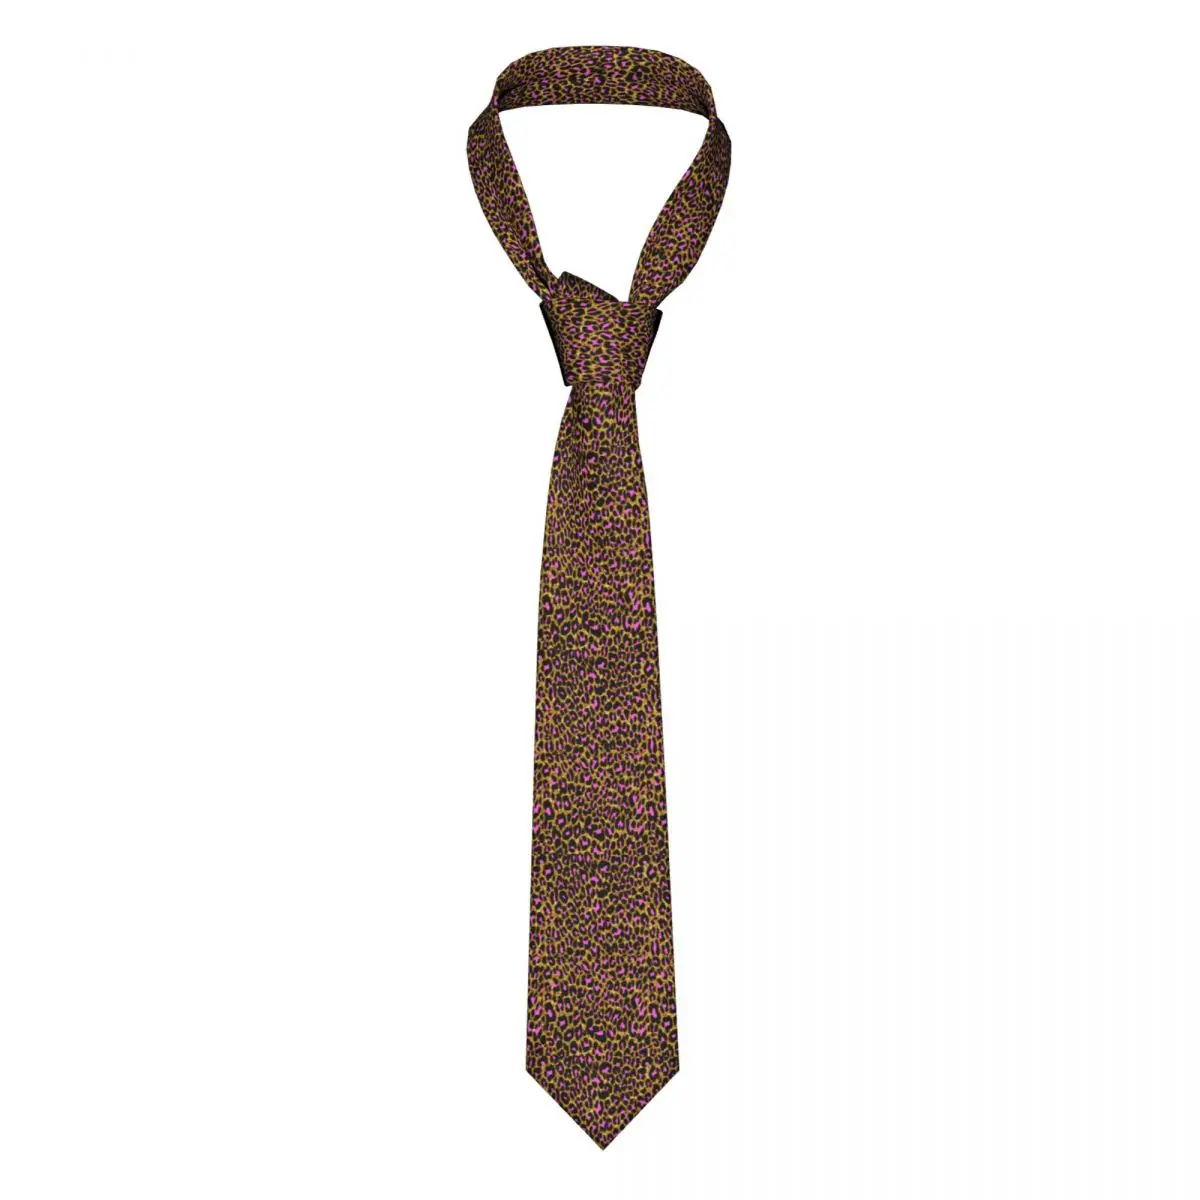 

Gold Metallic Tie Girly Pink Leopard Print Office 8CM Neck Ties For Man Gift Blouse Vintage Cravat